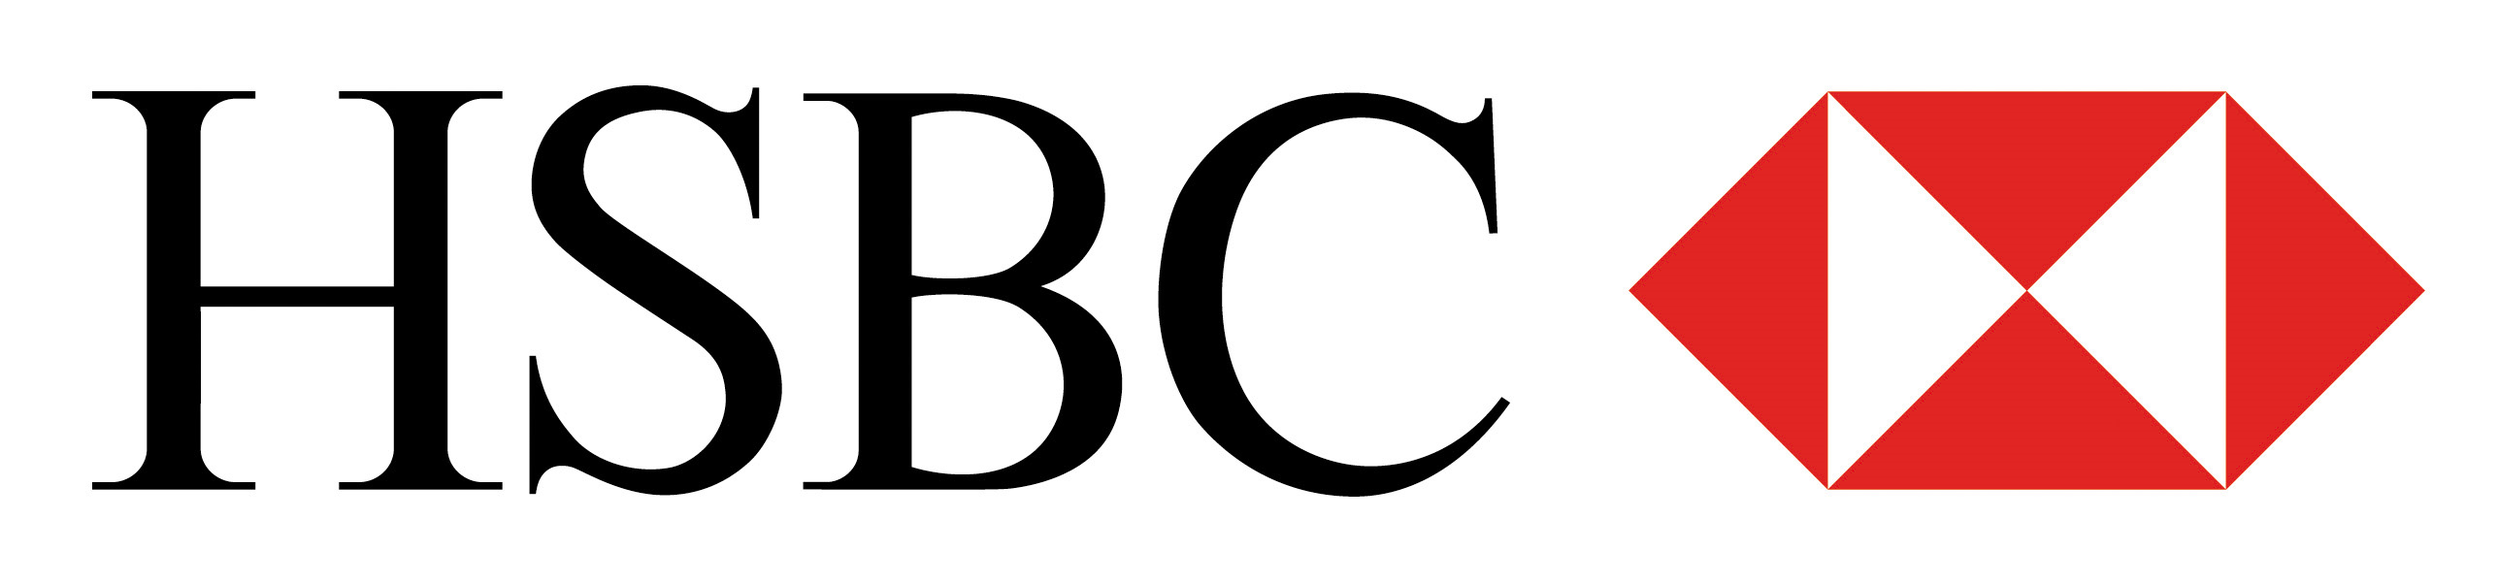 Hsbc-logo.png